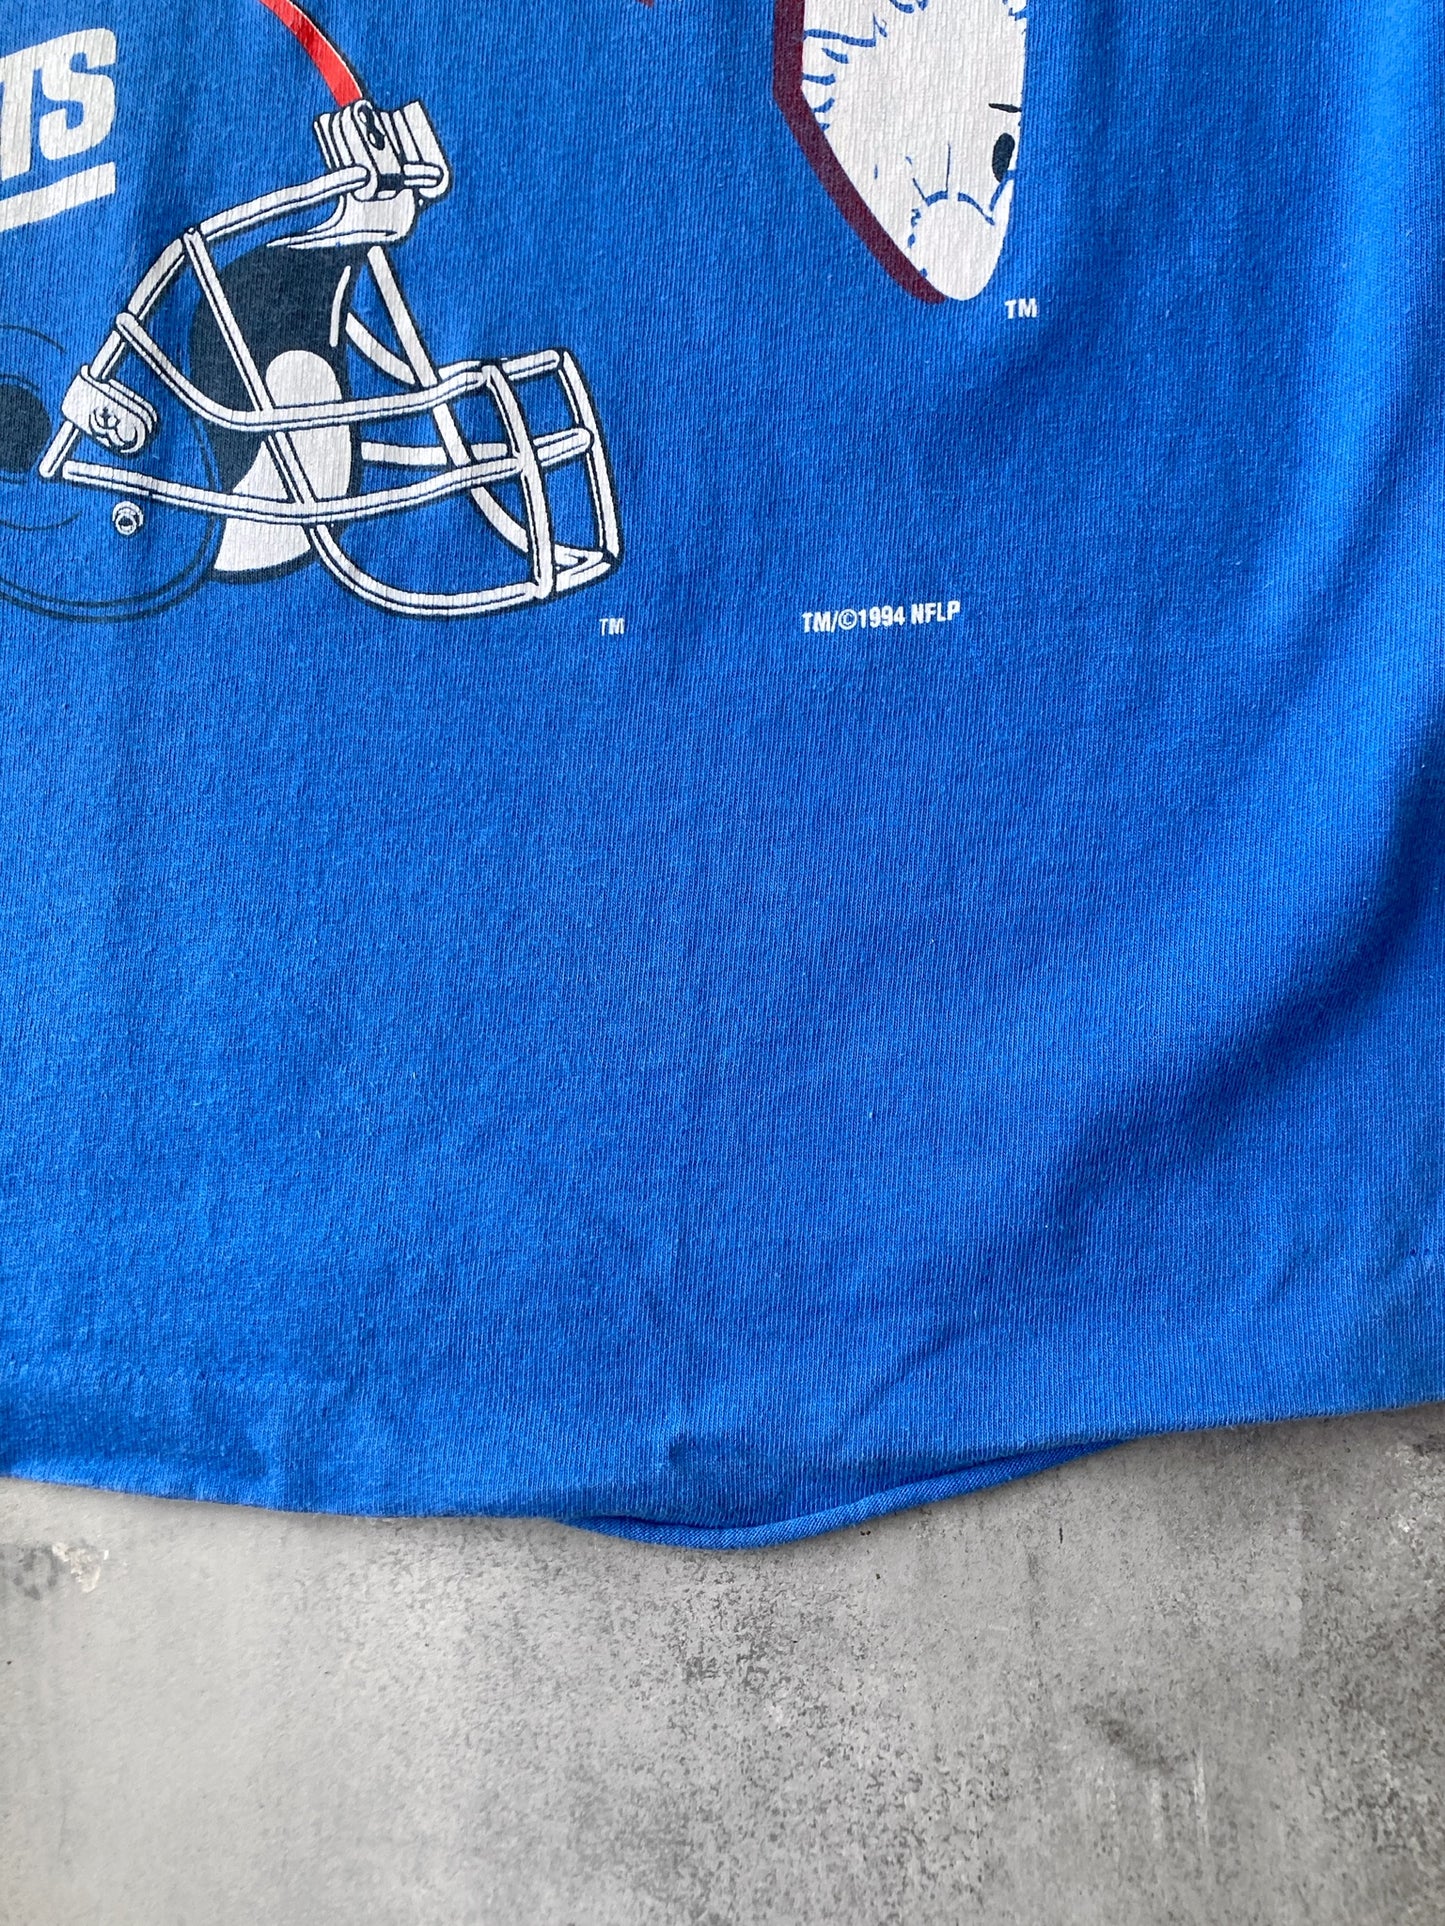 New York Giants T-shirt '94 - Medium